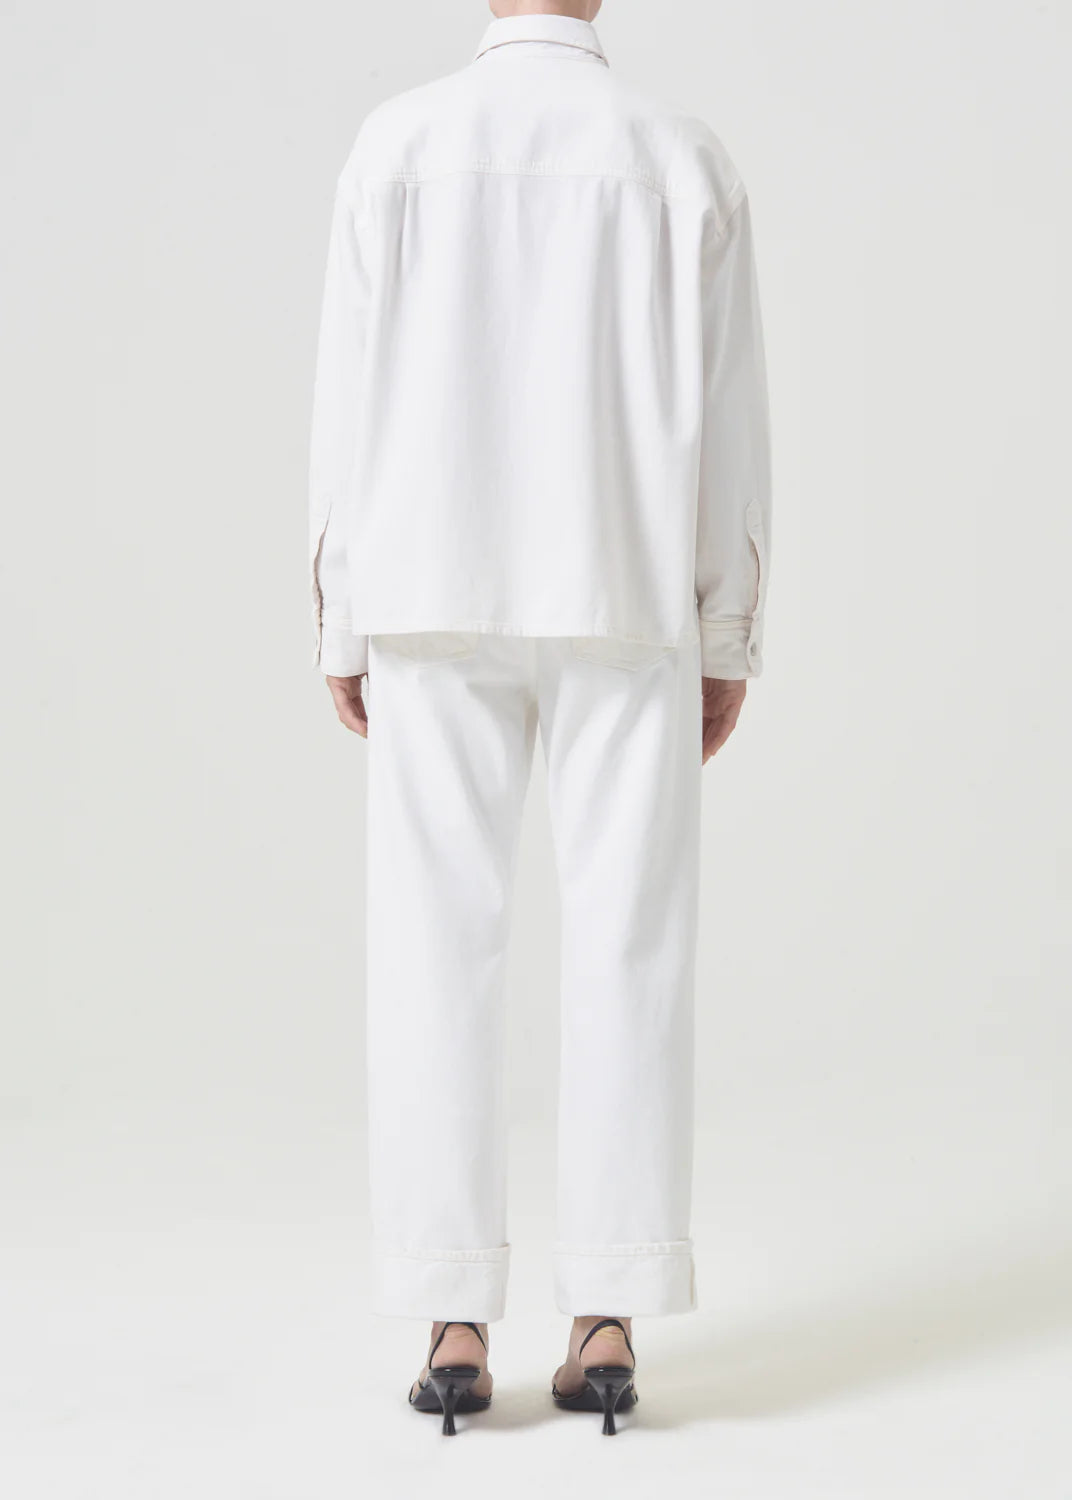 Model wears button down denim shirt in off white wash